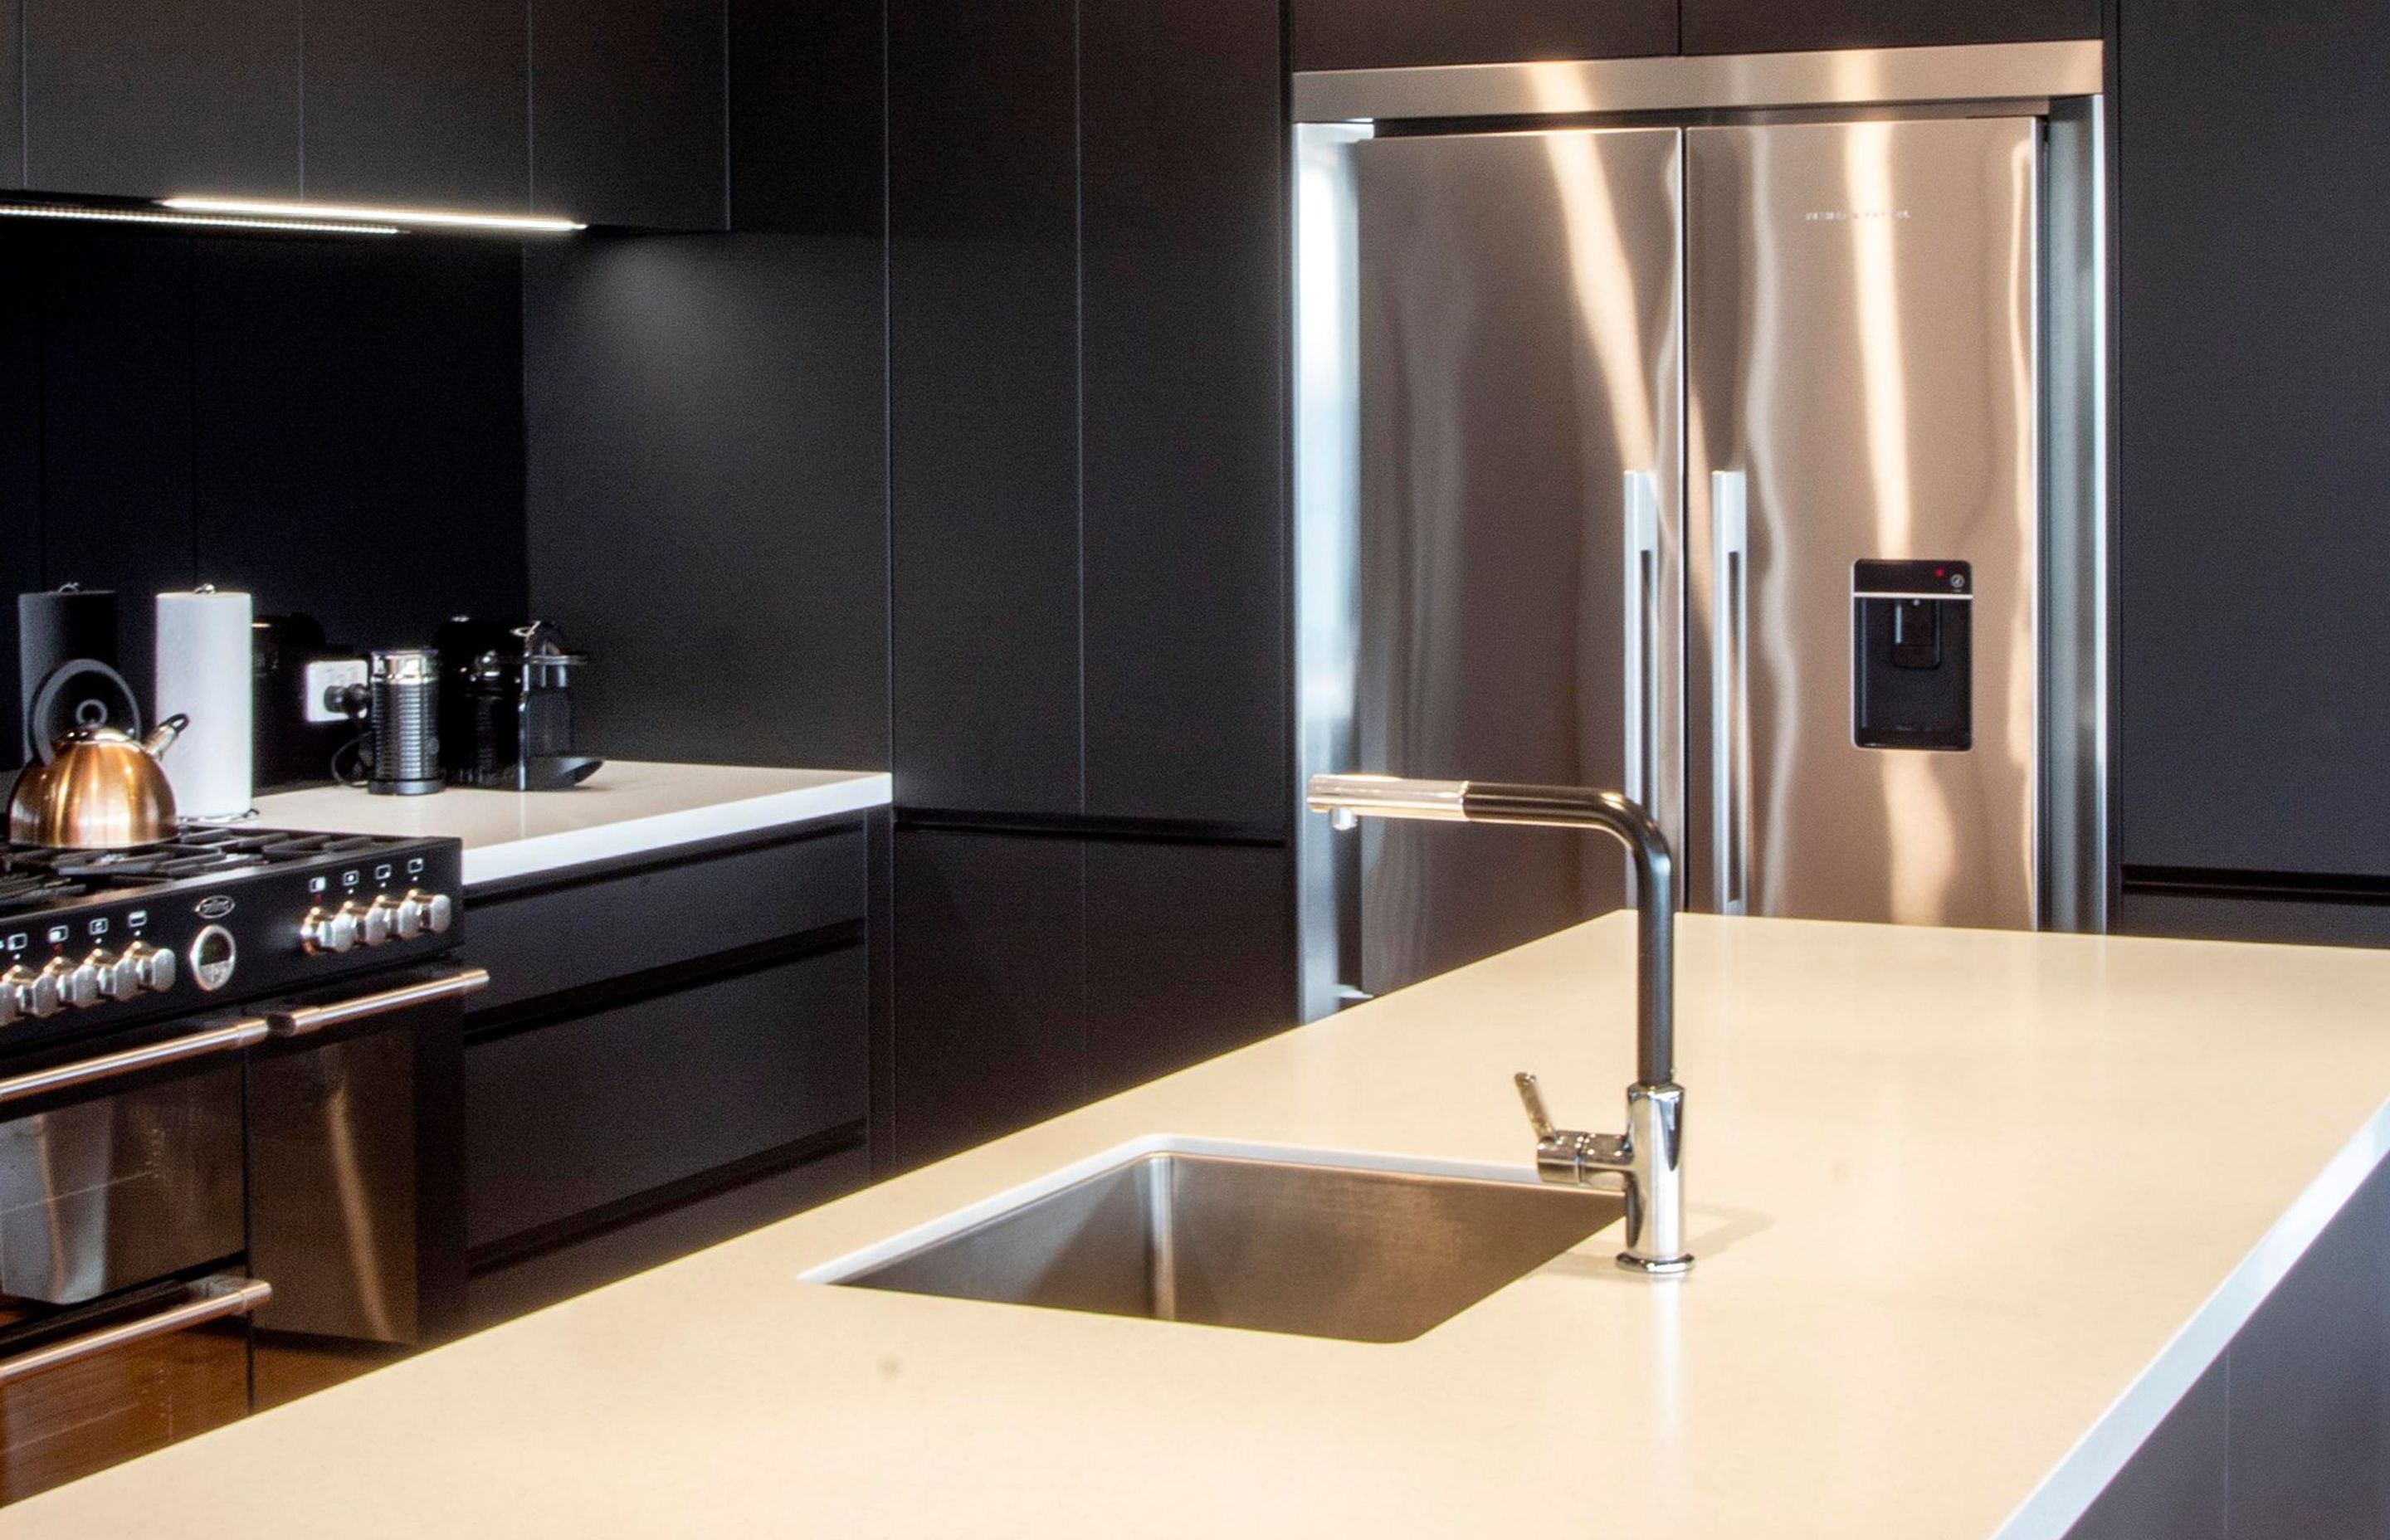 The elegant black, white and silver kitchen.